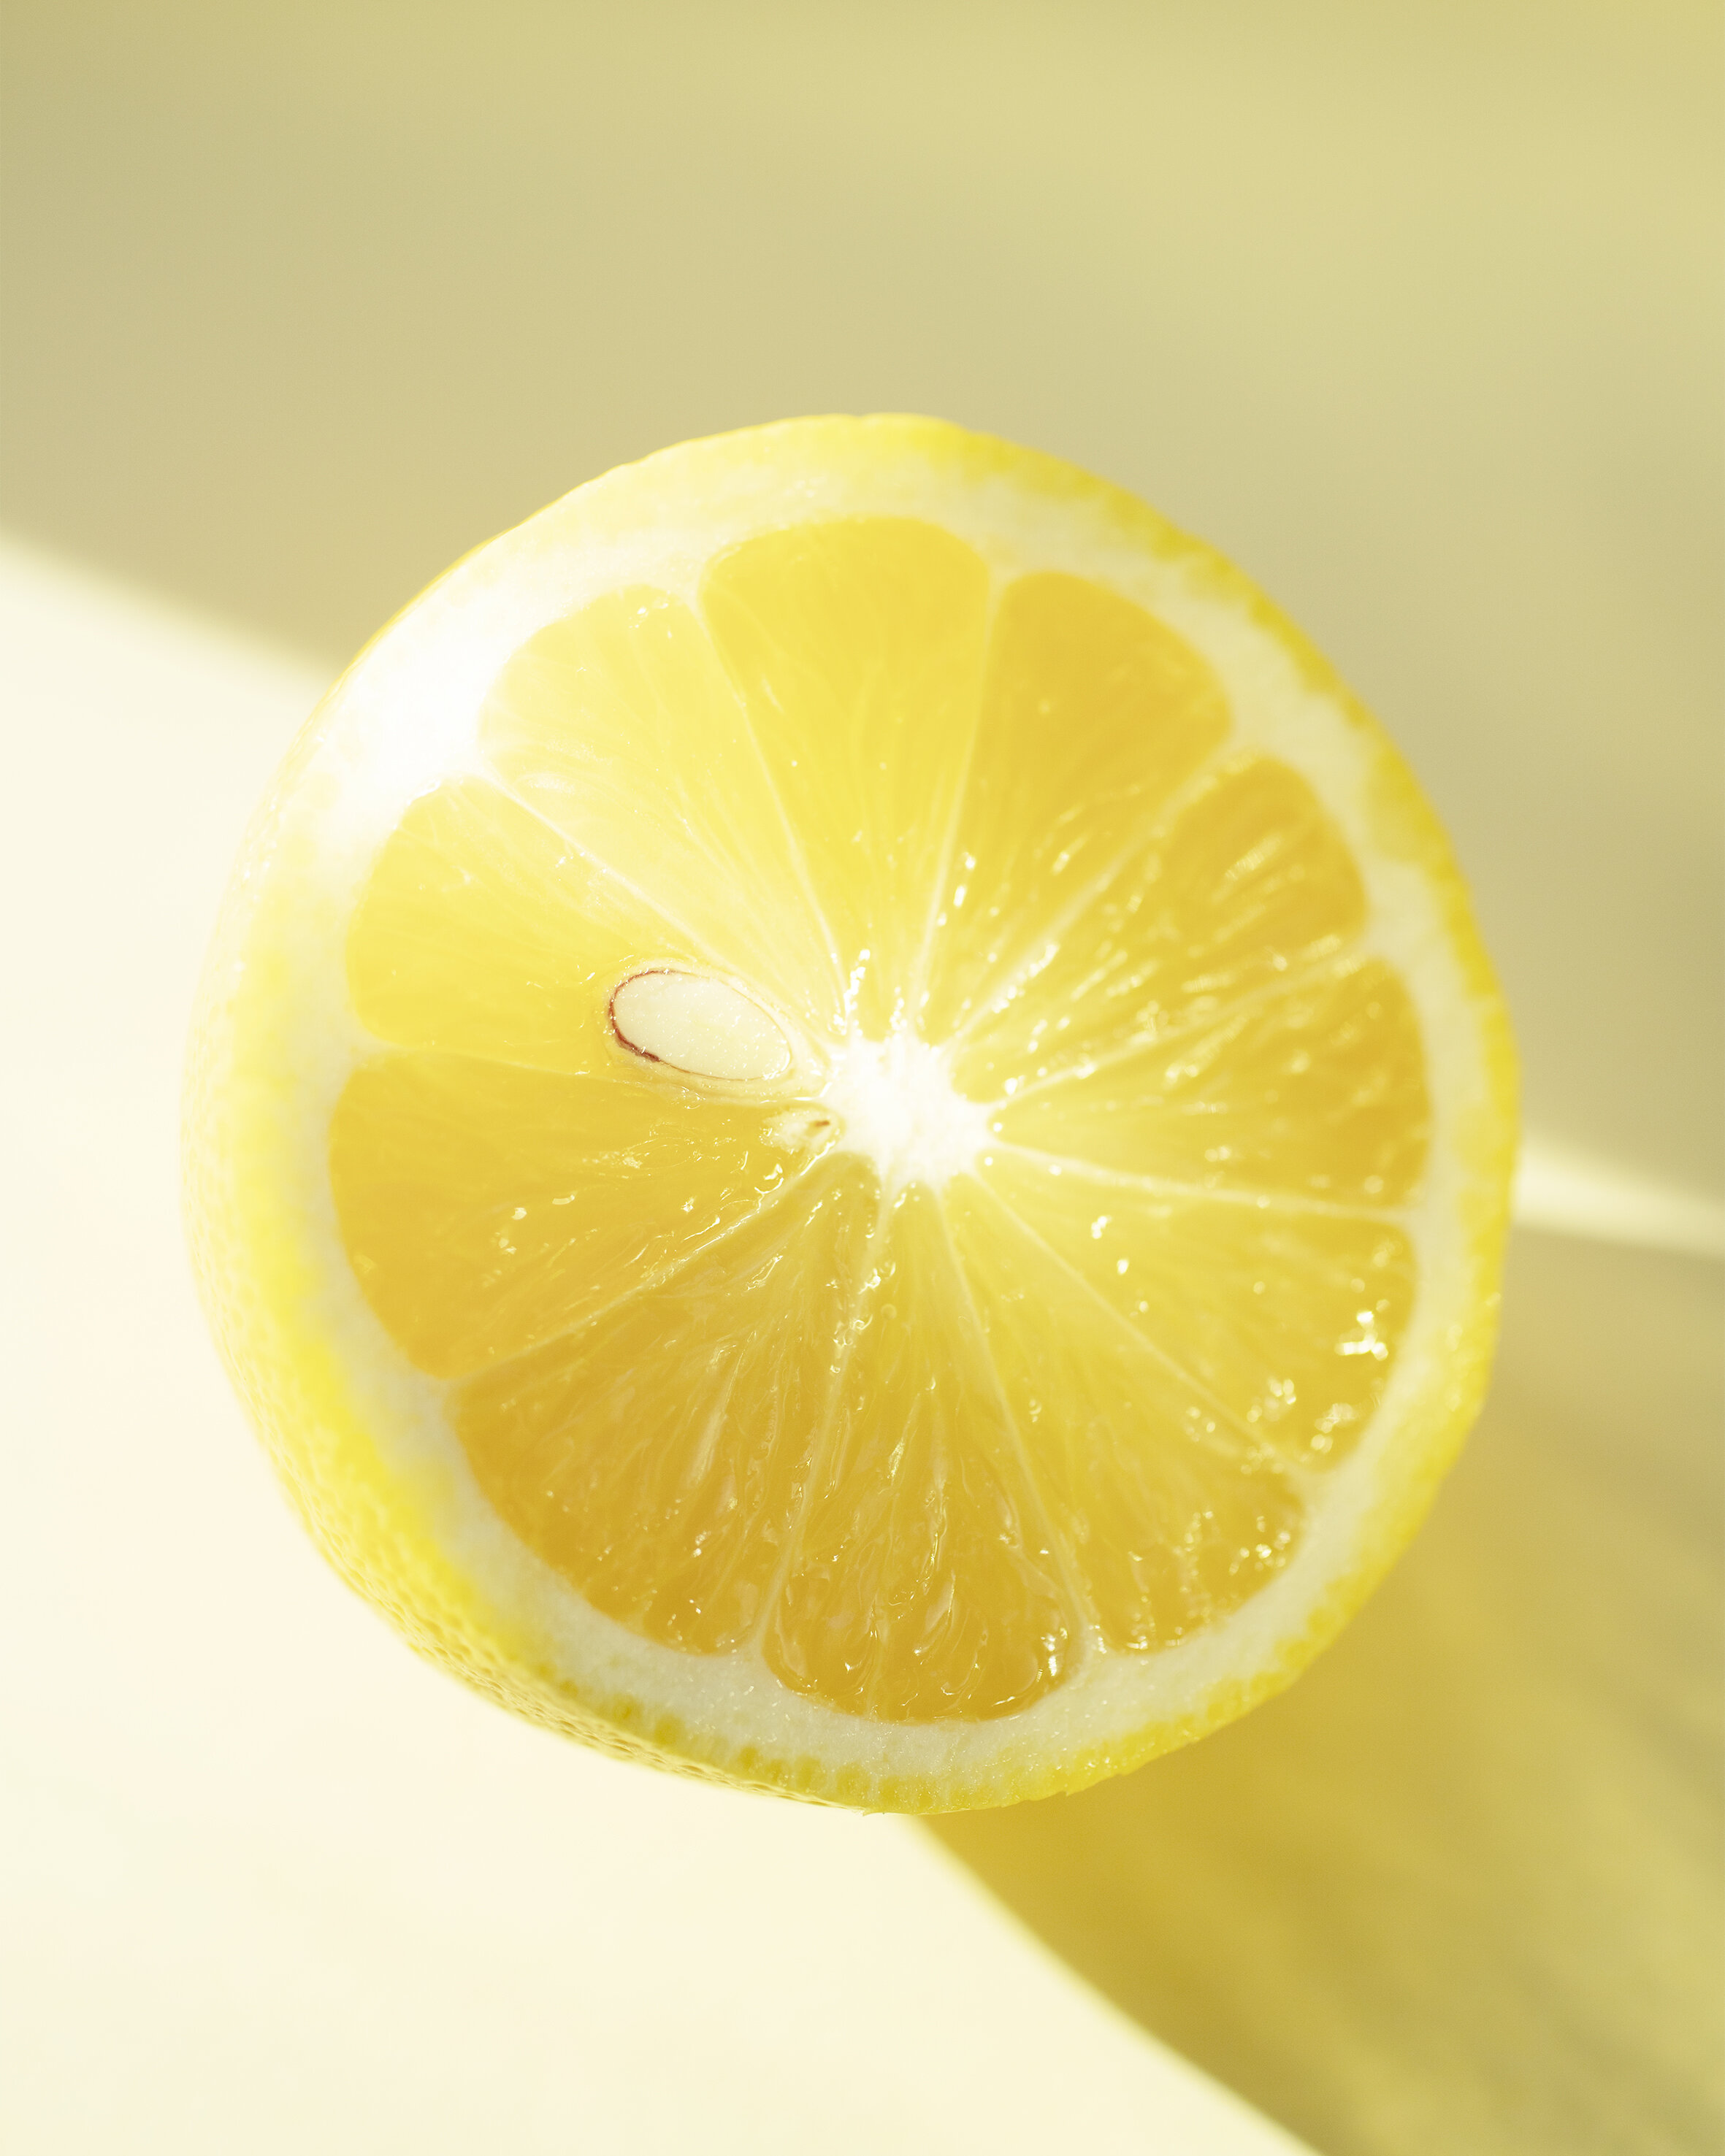 38. Lemon_Questioning_One pip_Focus_.jpg